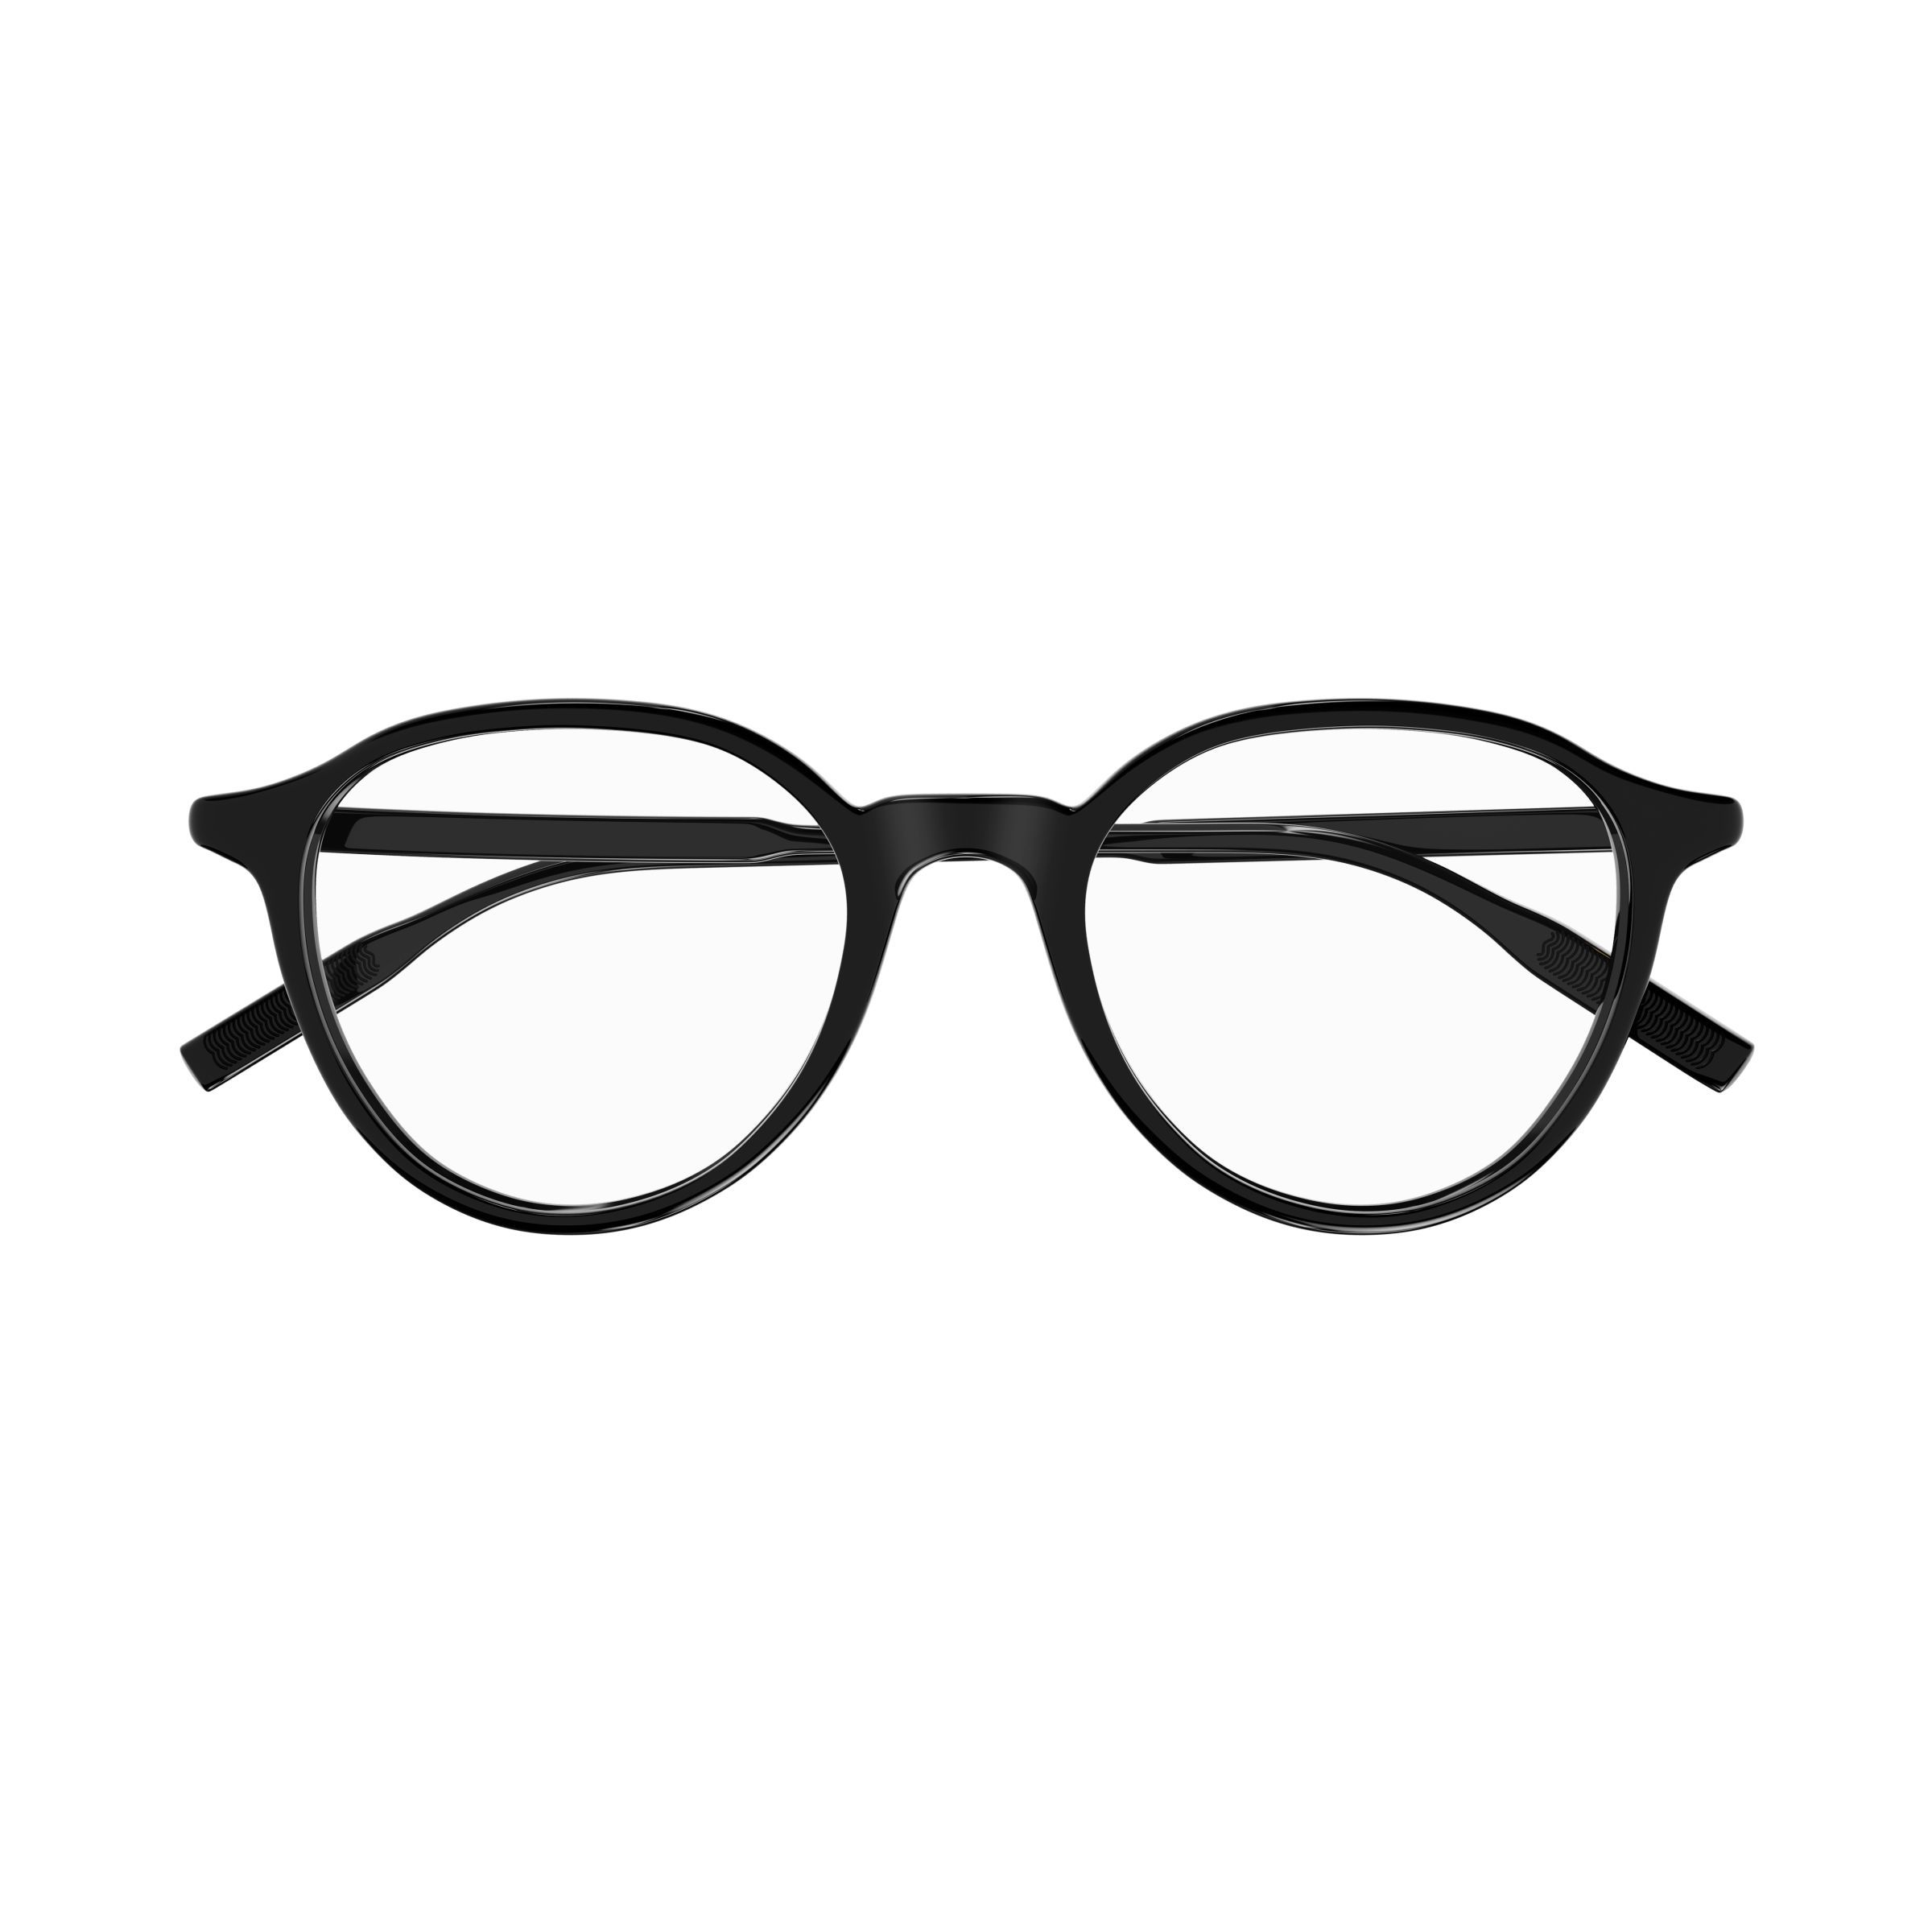 MB0291O Panthos Eyeglasses 001 - size 50